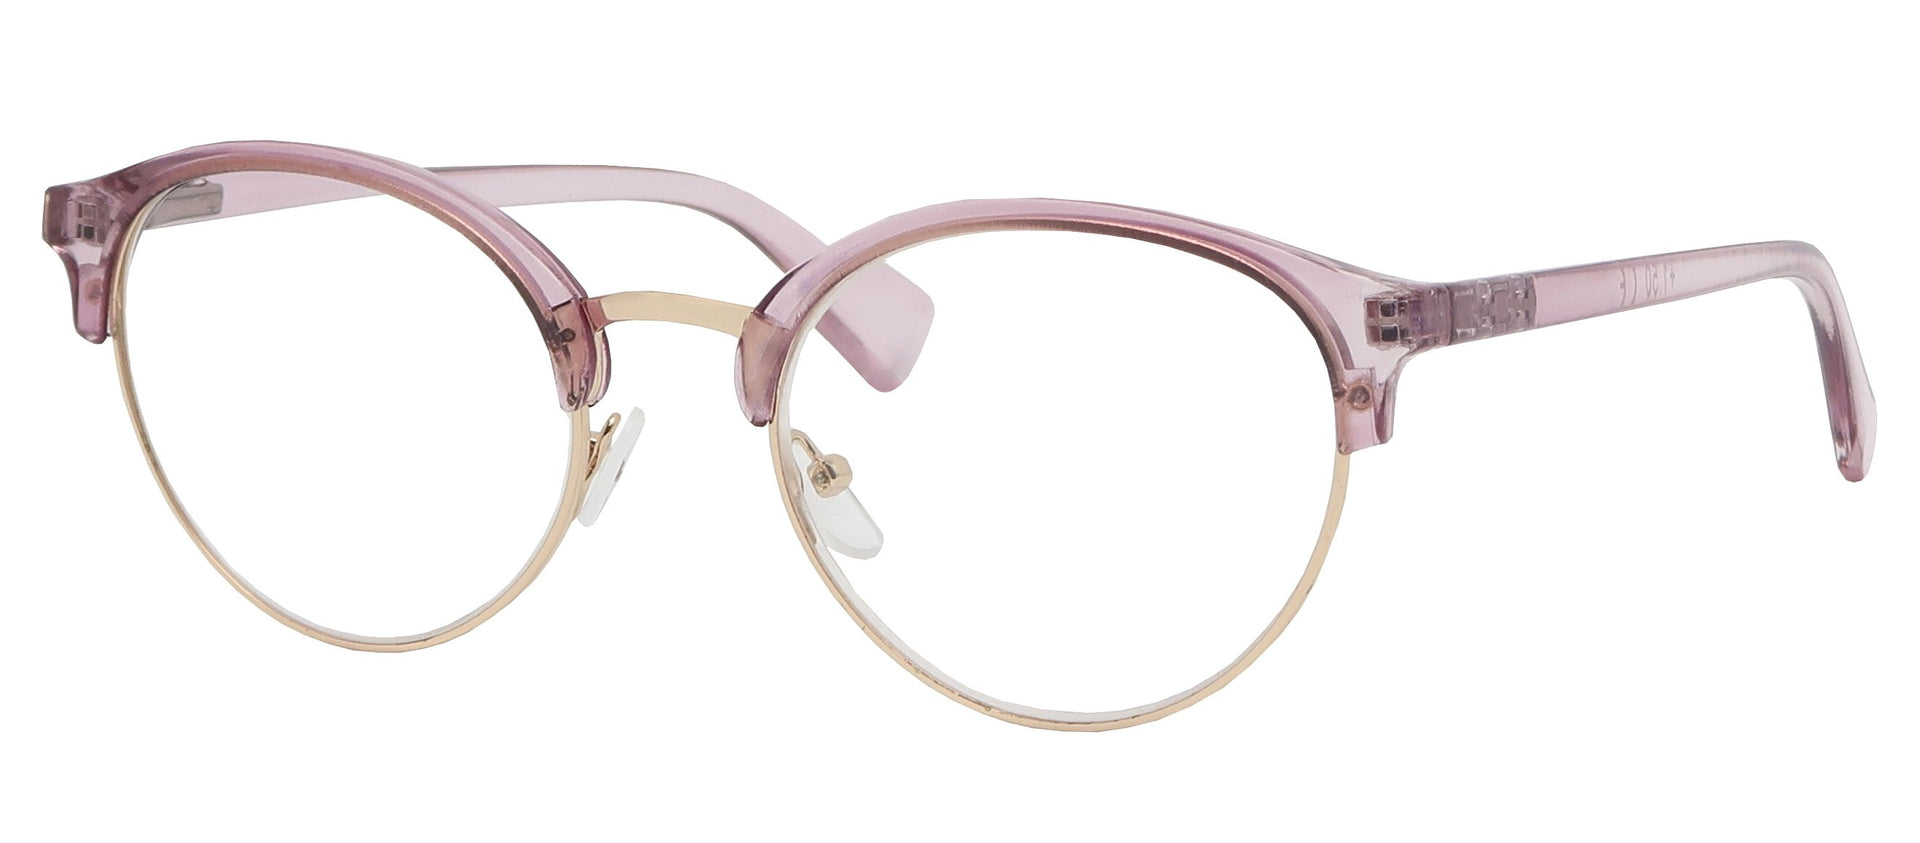 ST5915R - Wholesale Women's Translucent Browline Metal Reading Glasses in Purple